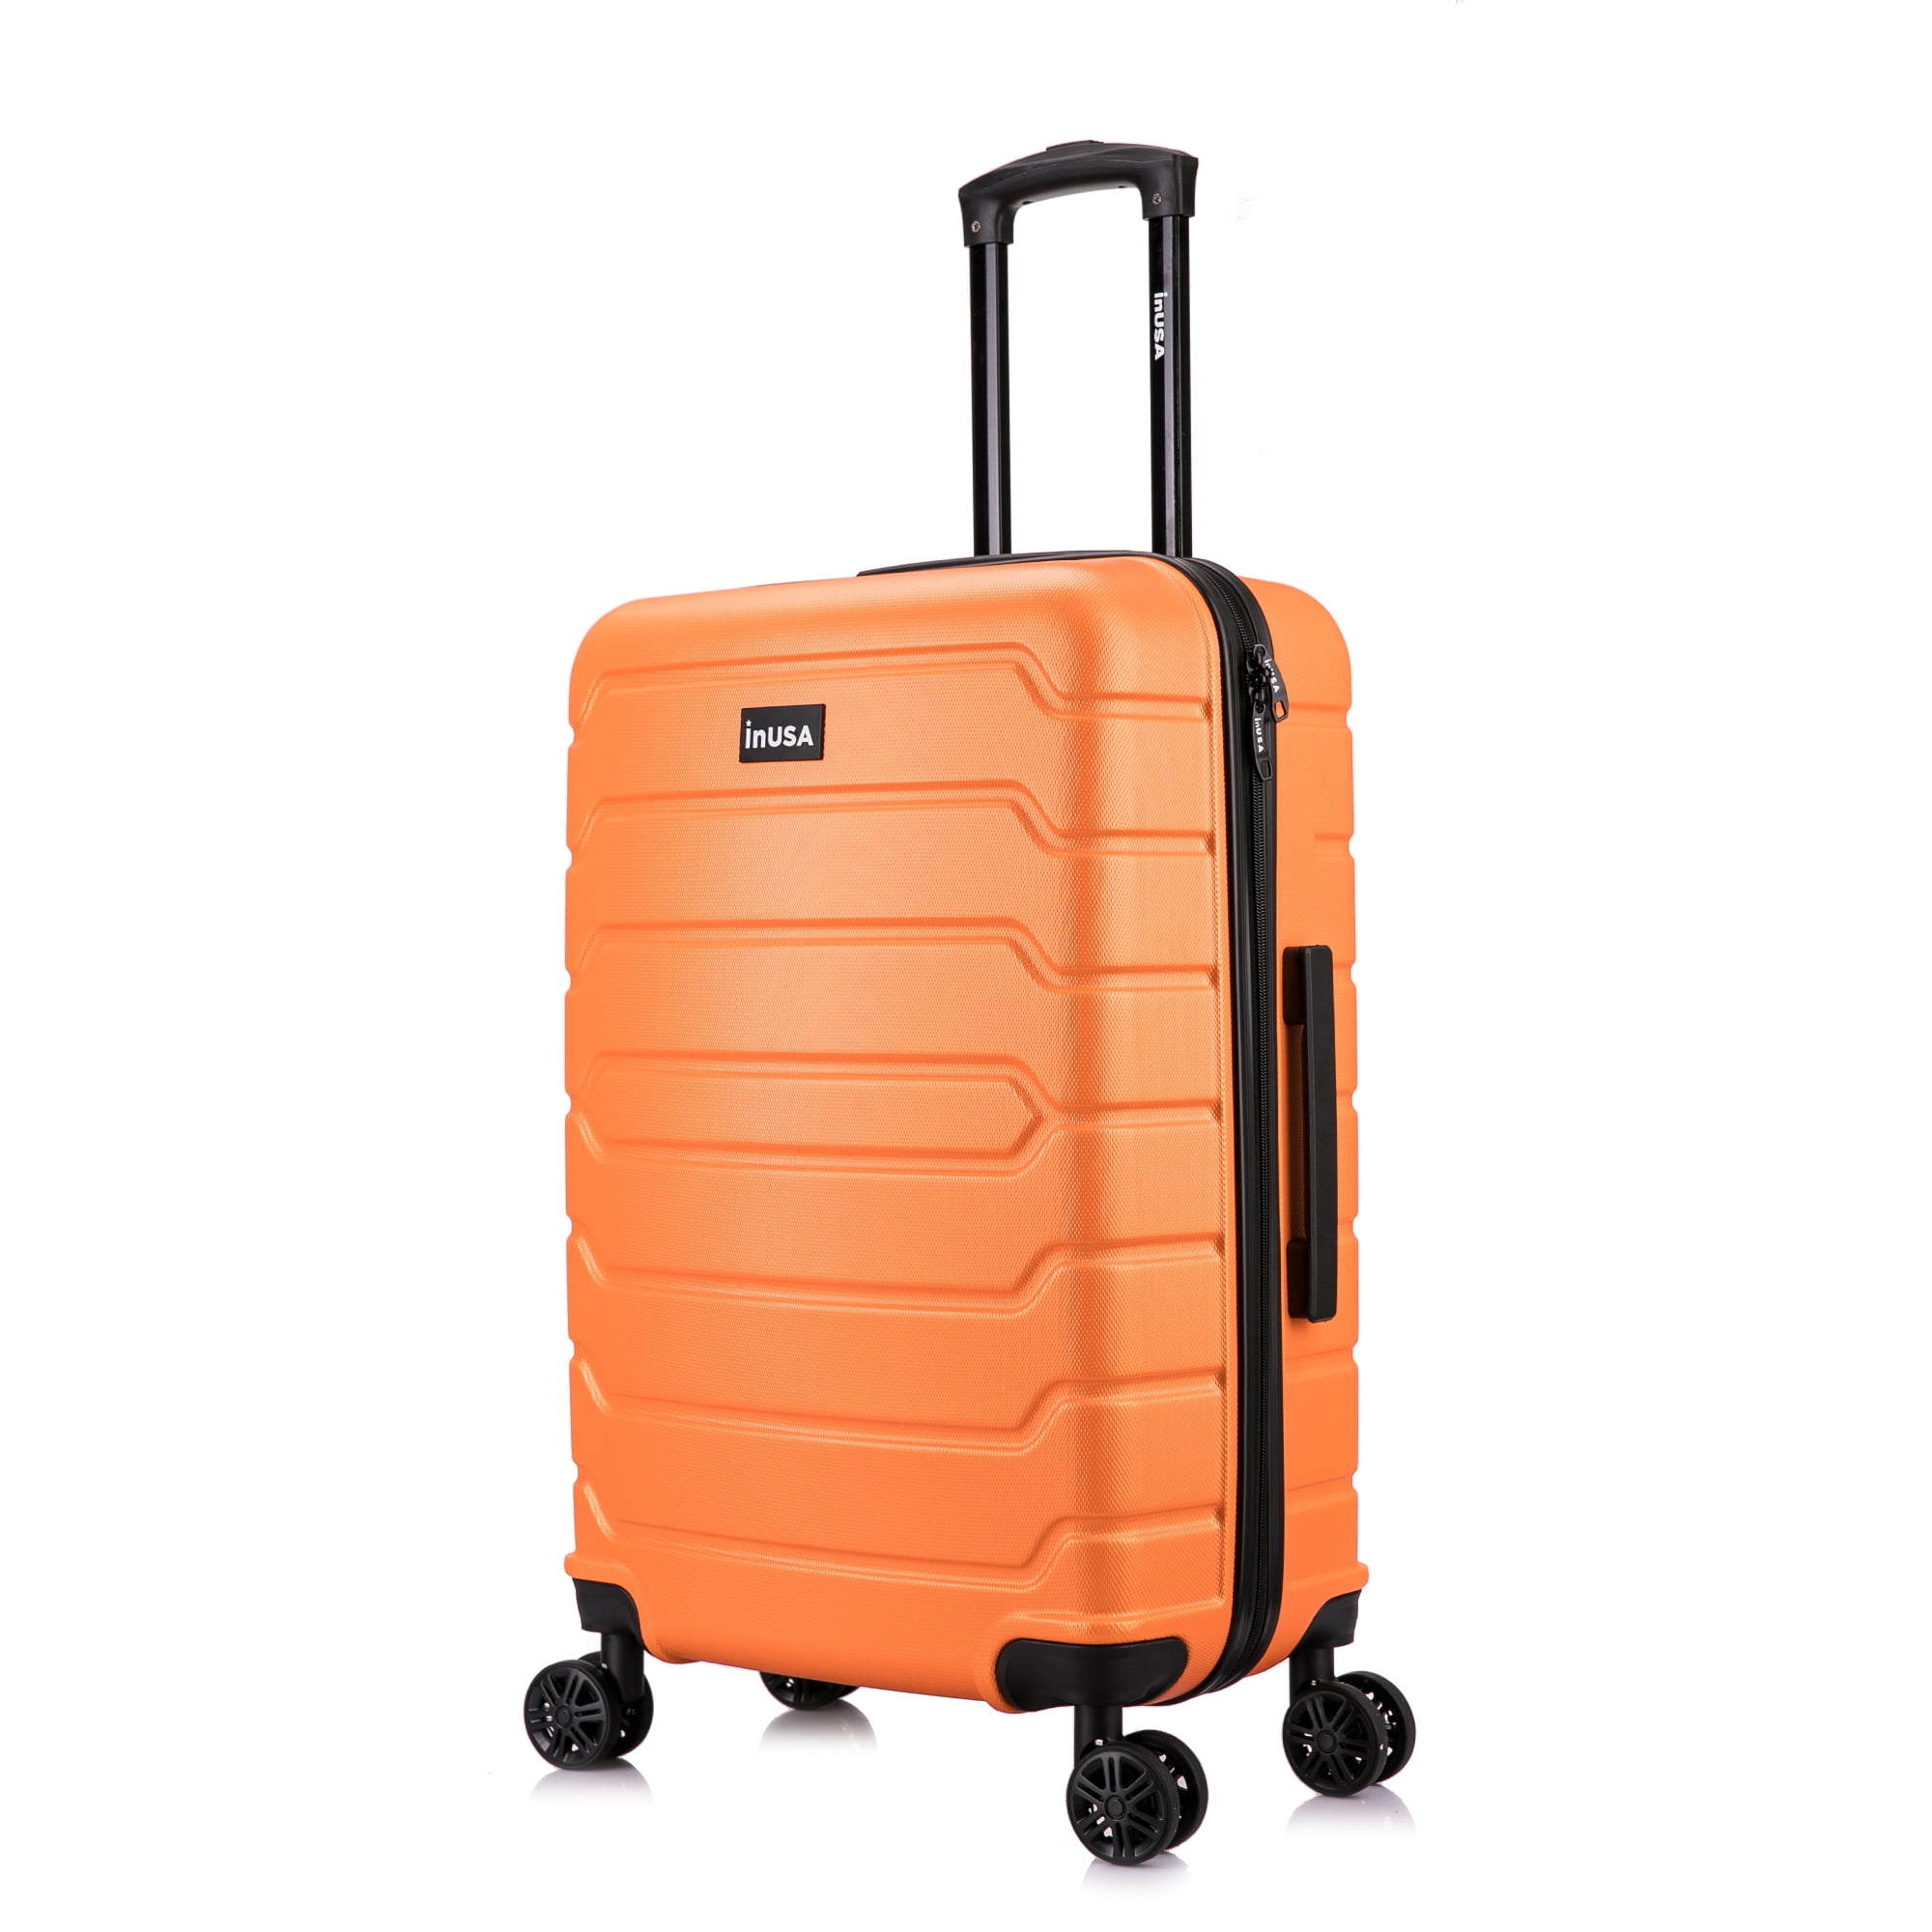 InUSA Trend Lightweight Hardside Medium Checked Spinner Suitcase - Orange